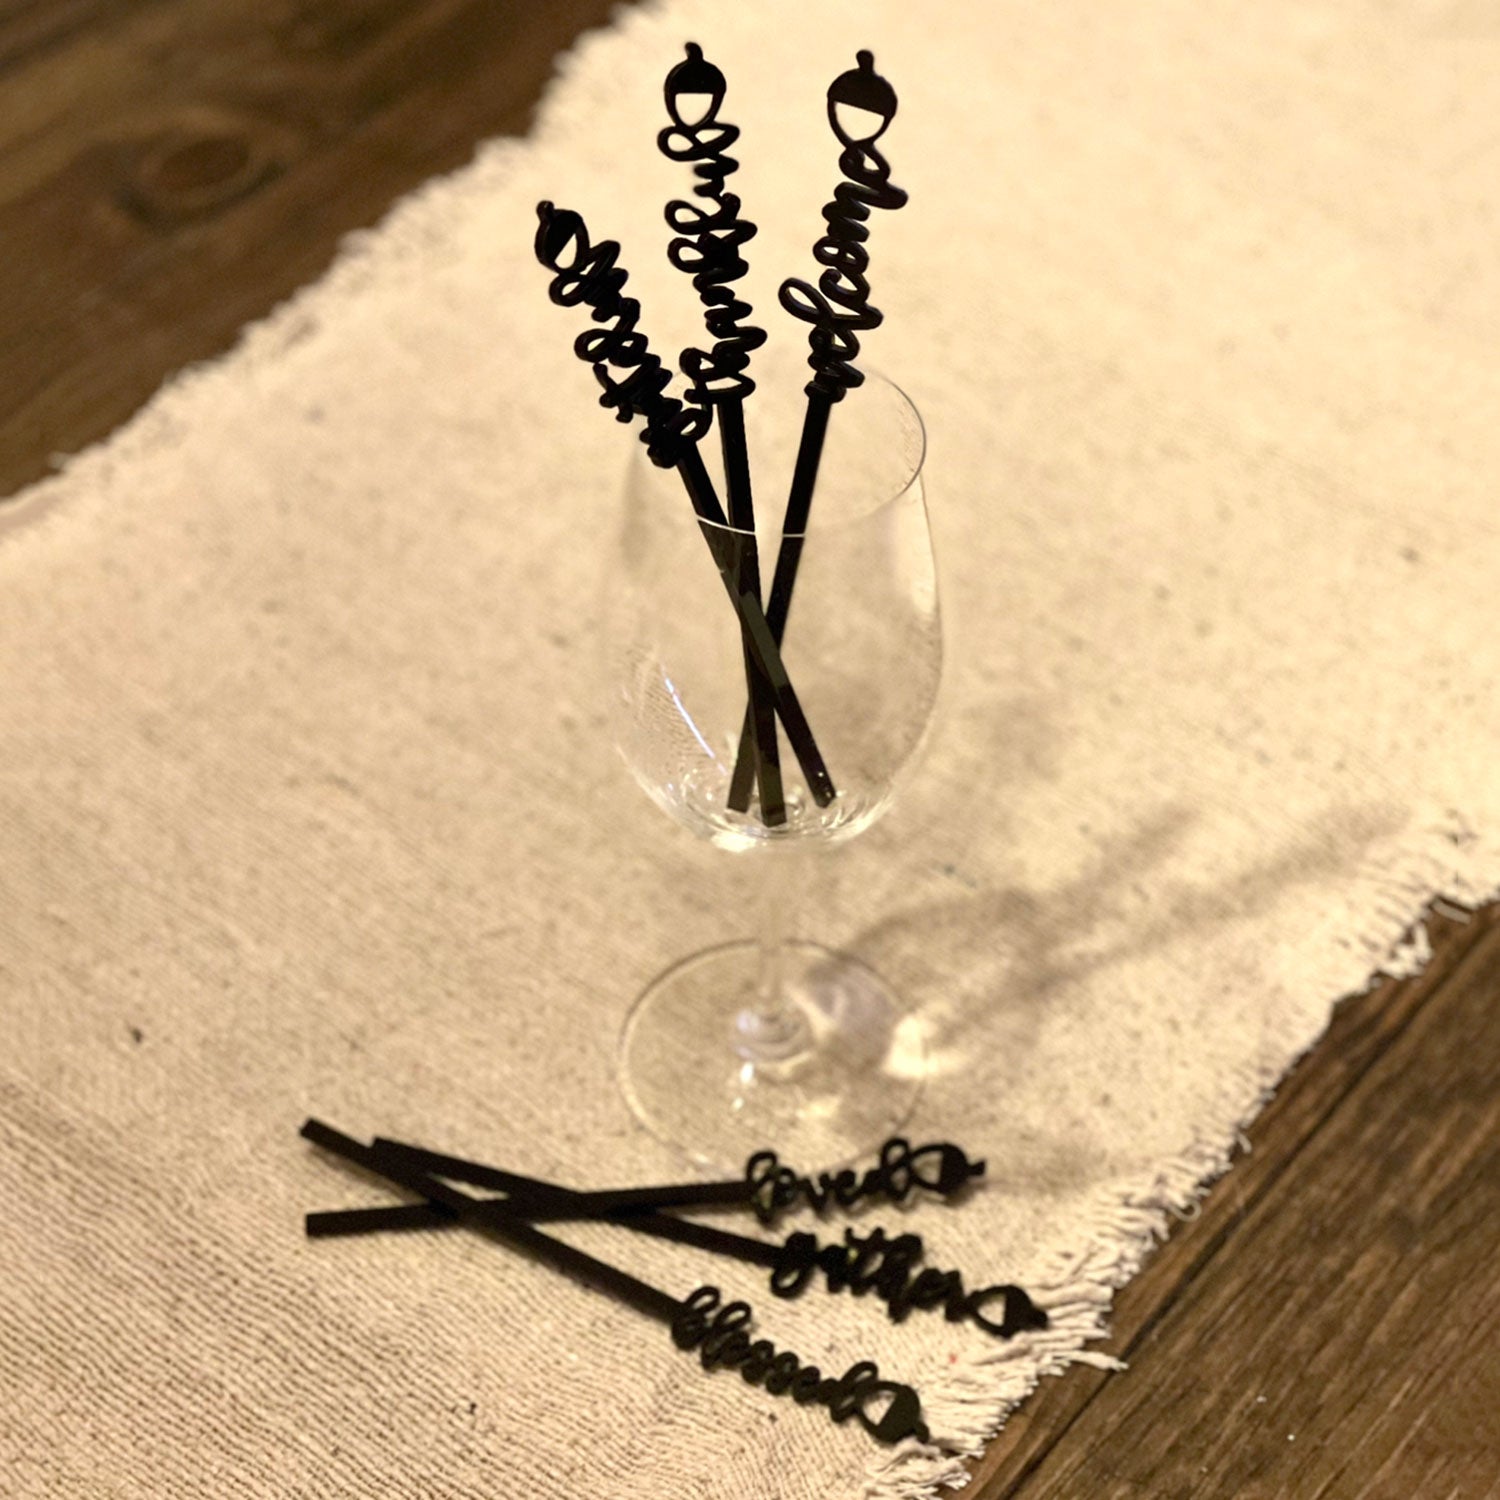 6 Black Flat Plastic Cocktail Stir Rods